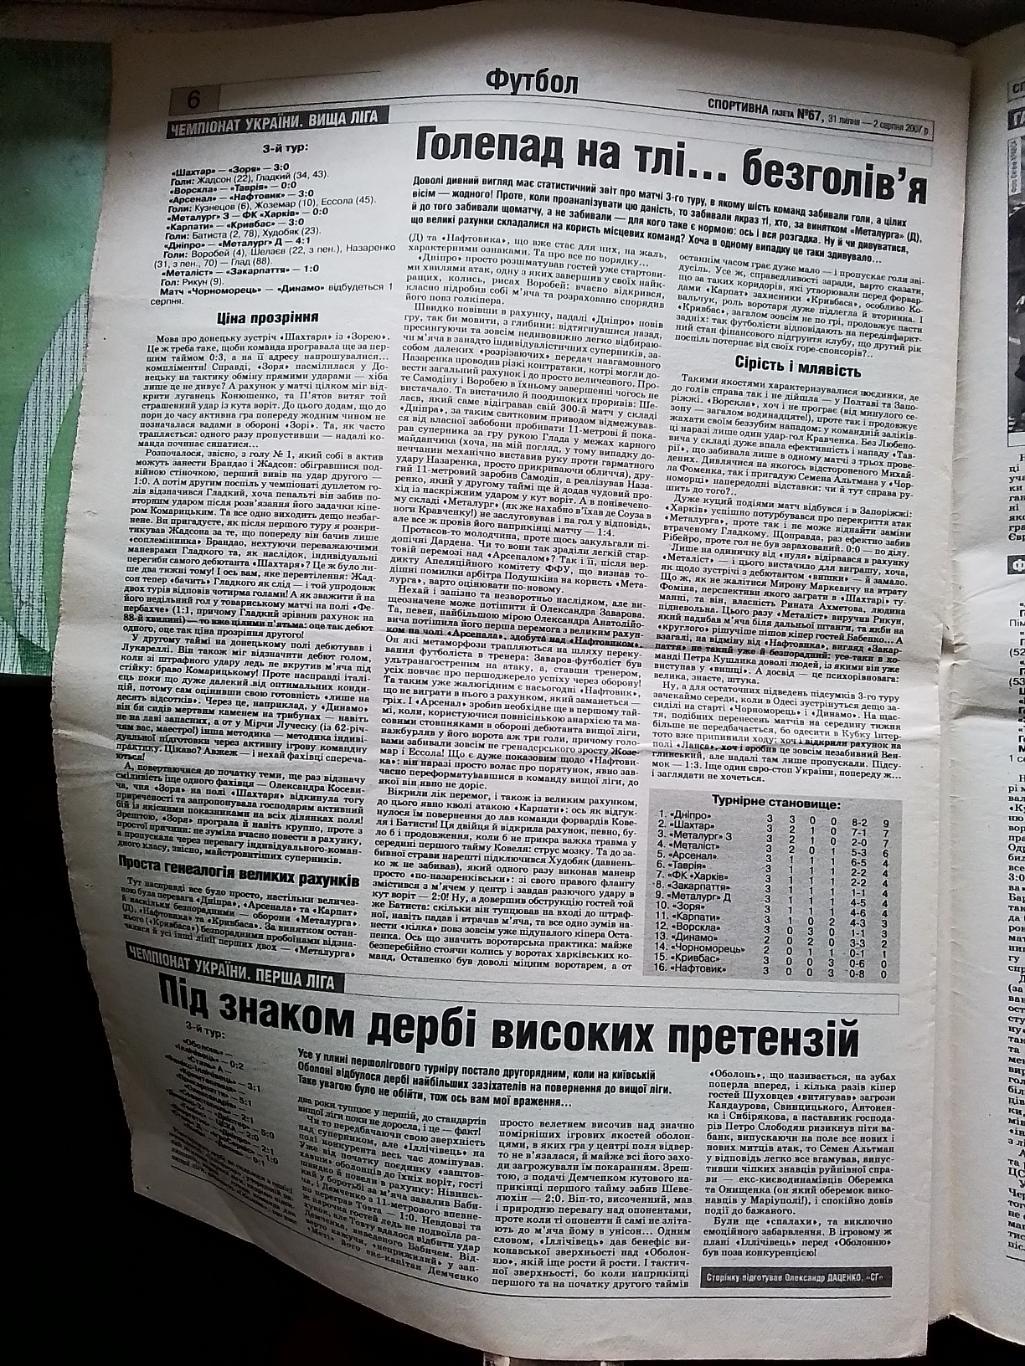 Спортивна газета 31.07 - 2. 08. 2007 N 67 (8209) 3 тур чемп Украины 3